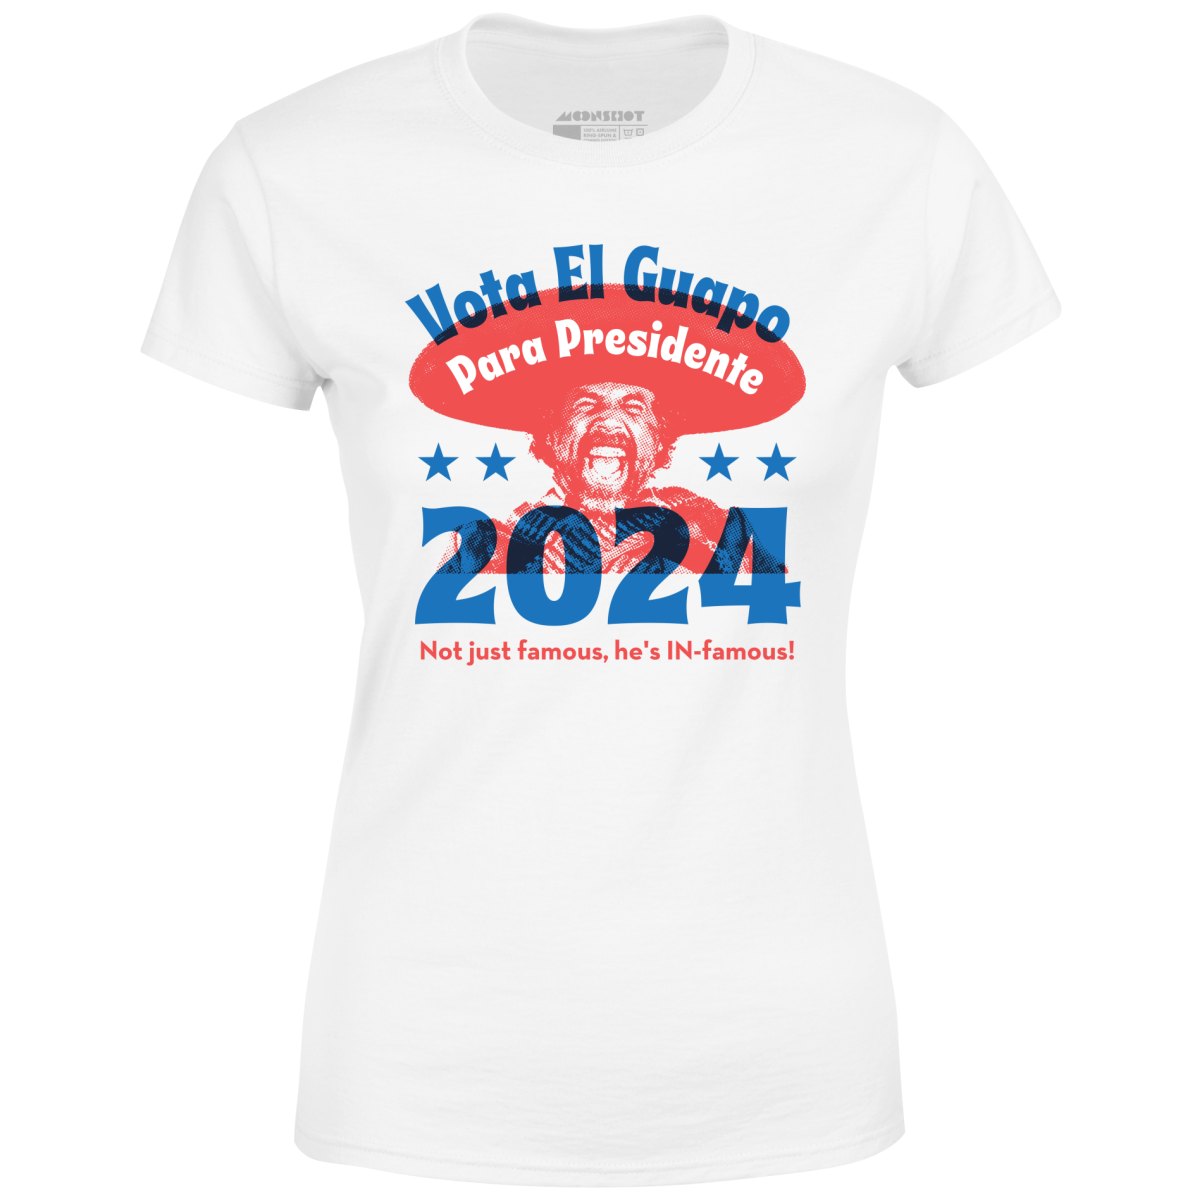 El Guapo 2024 - Women's T-Shirt